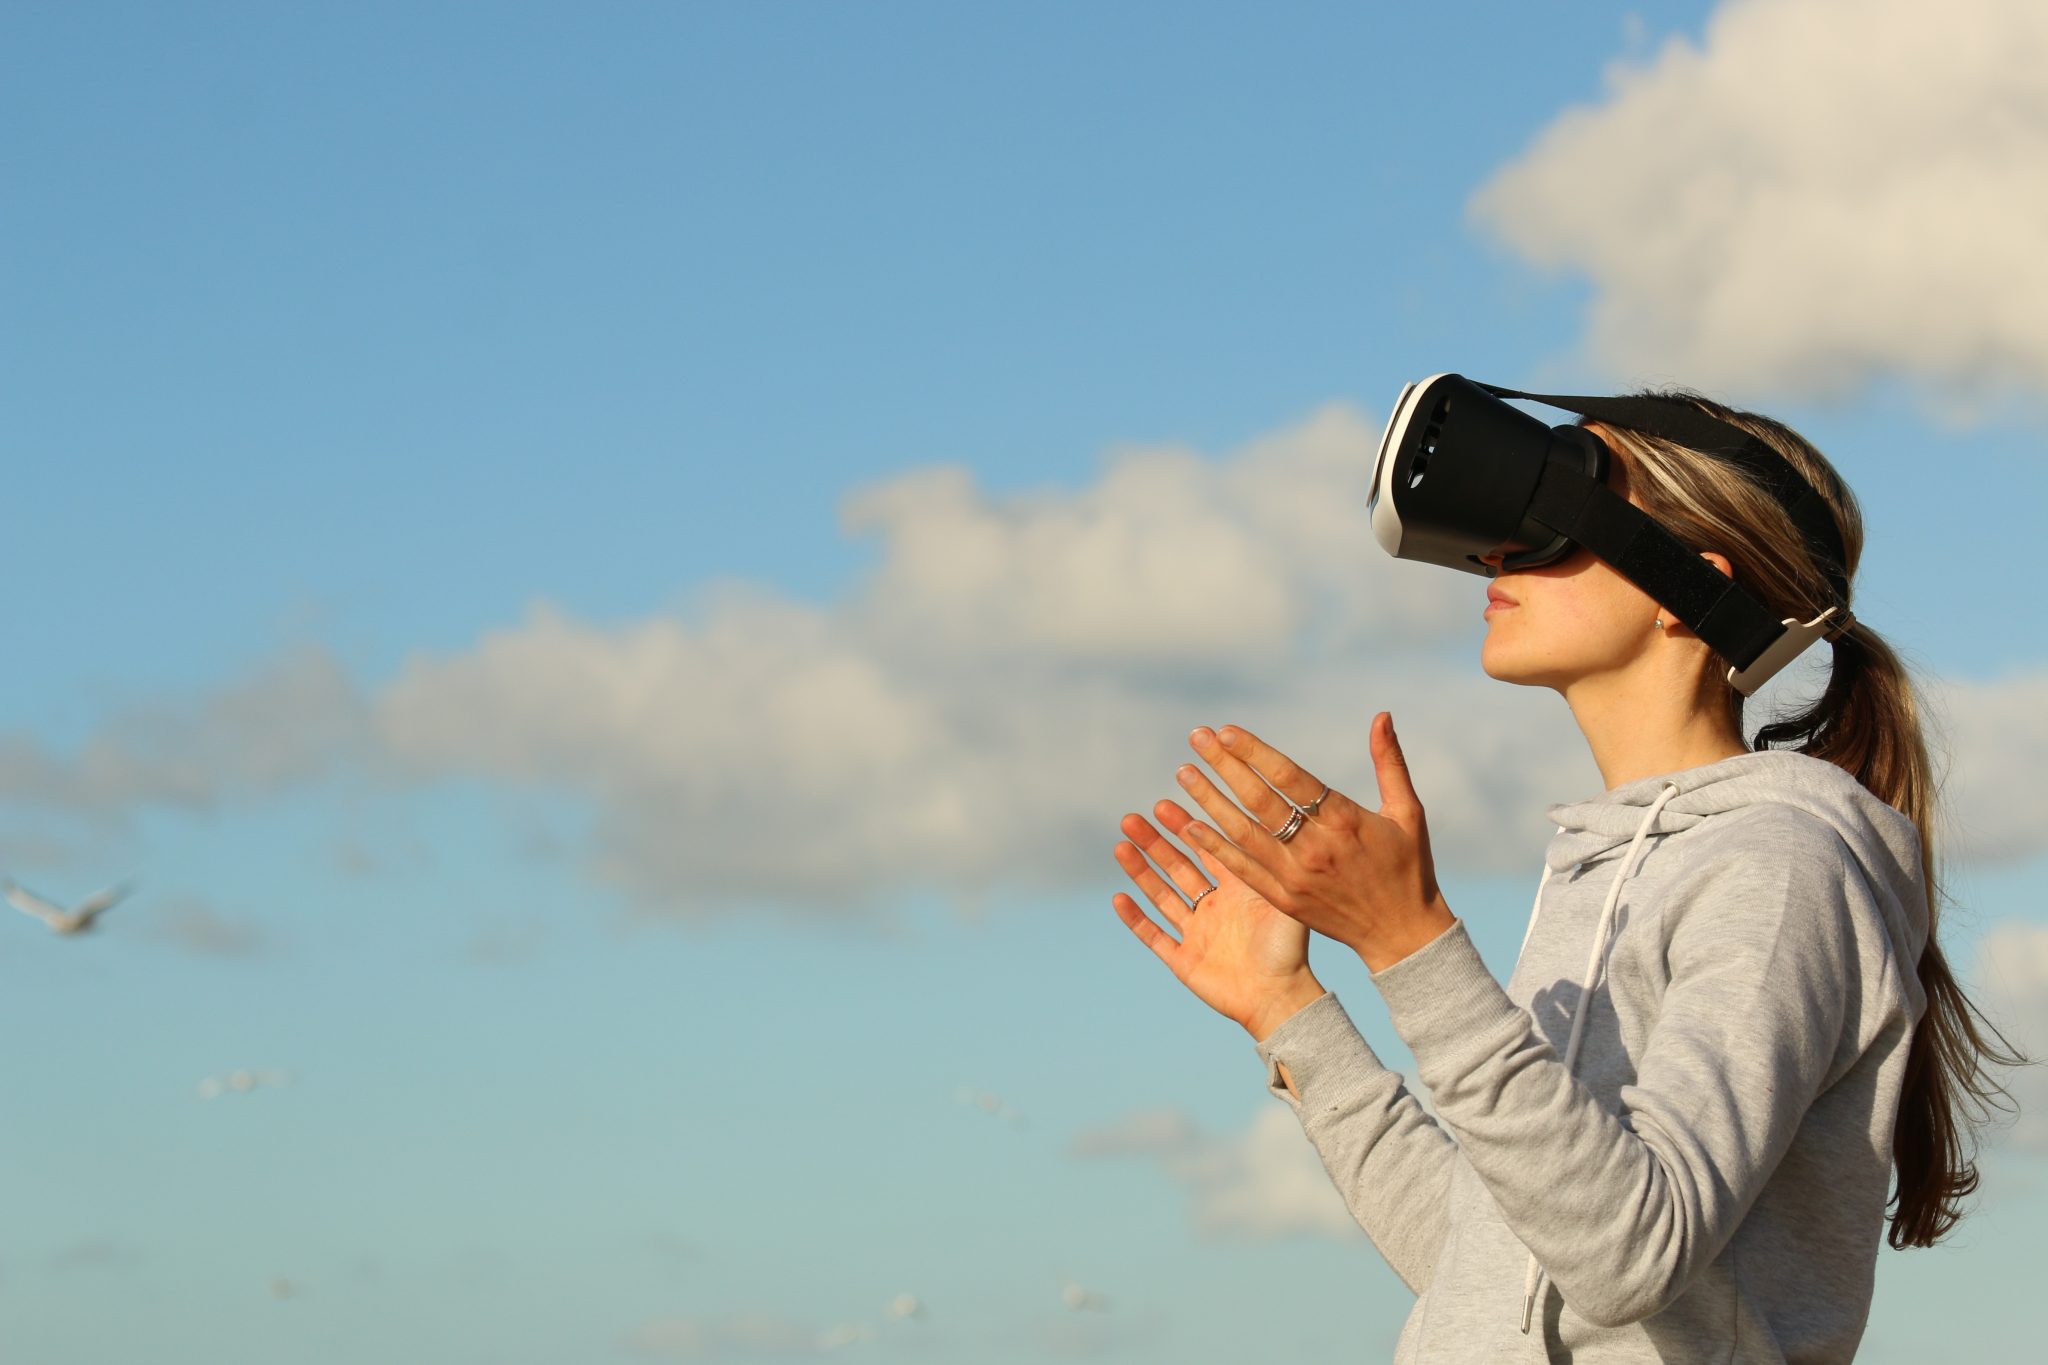 Enter A Virtual Reality